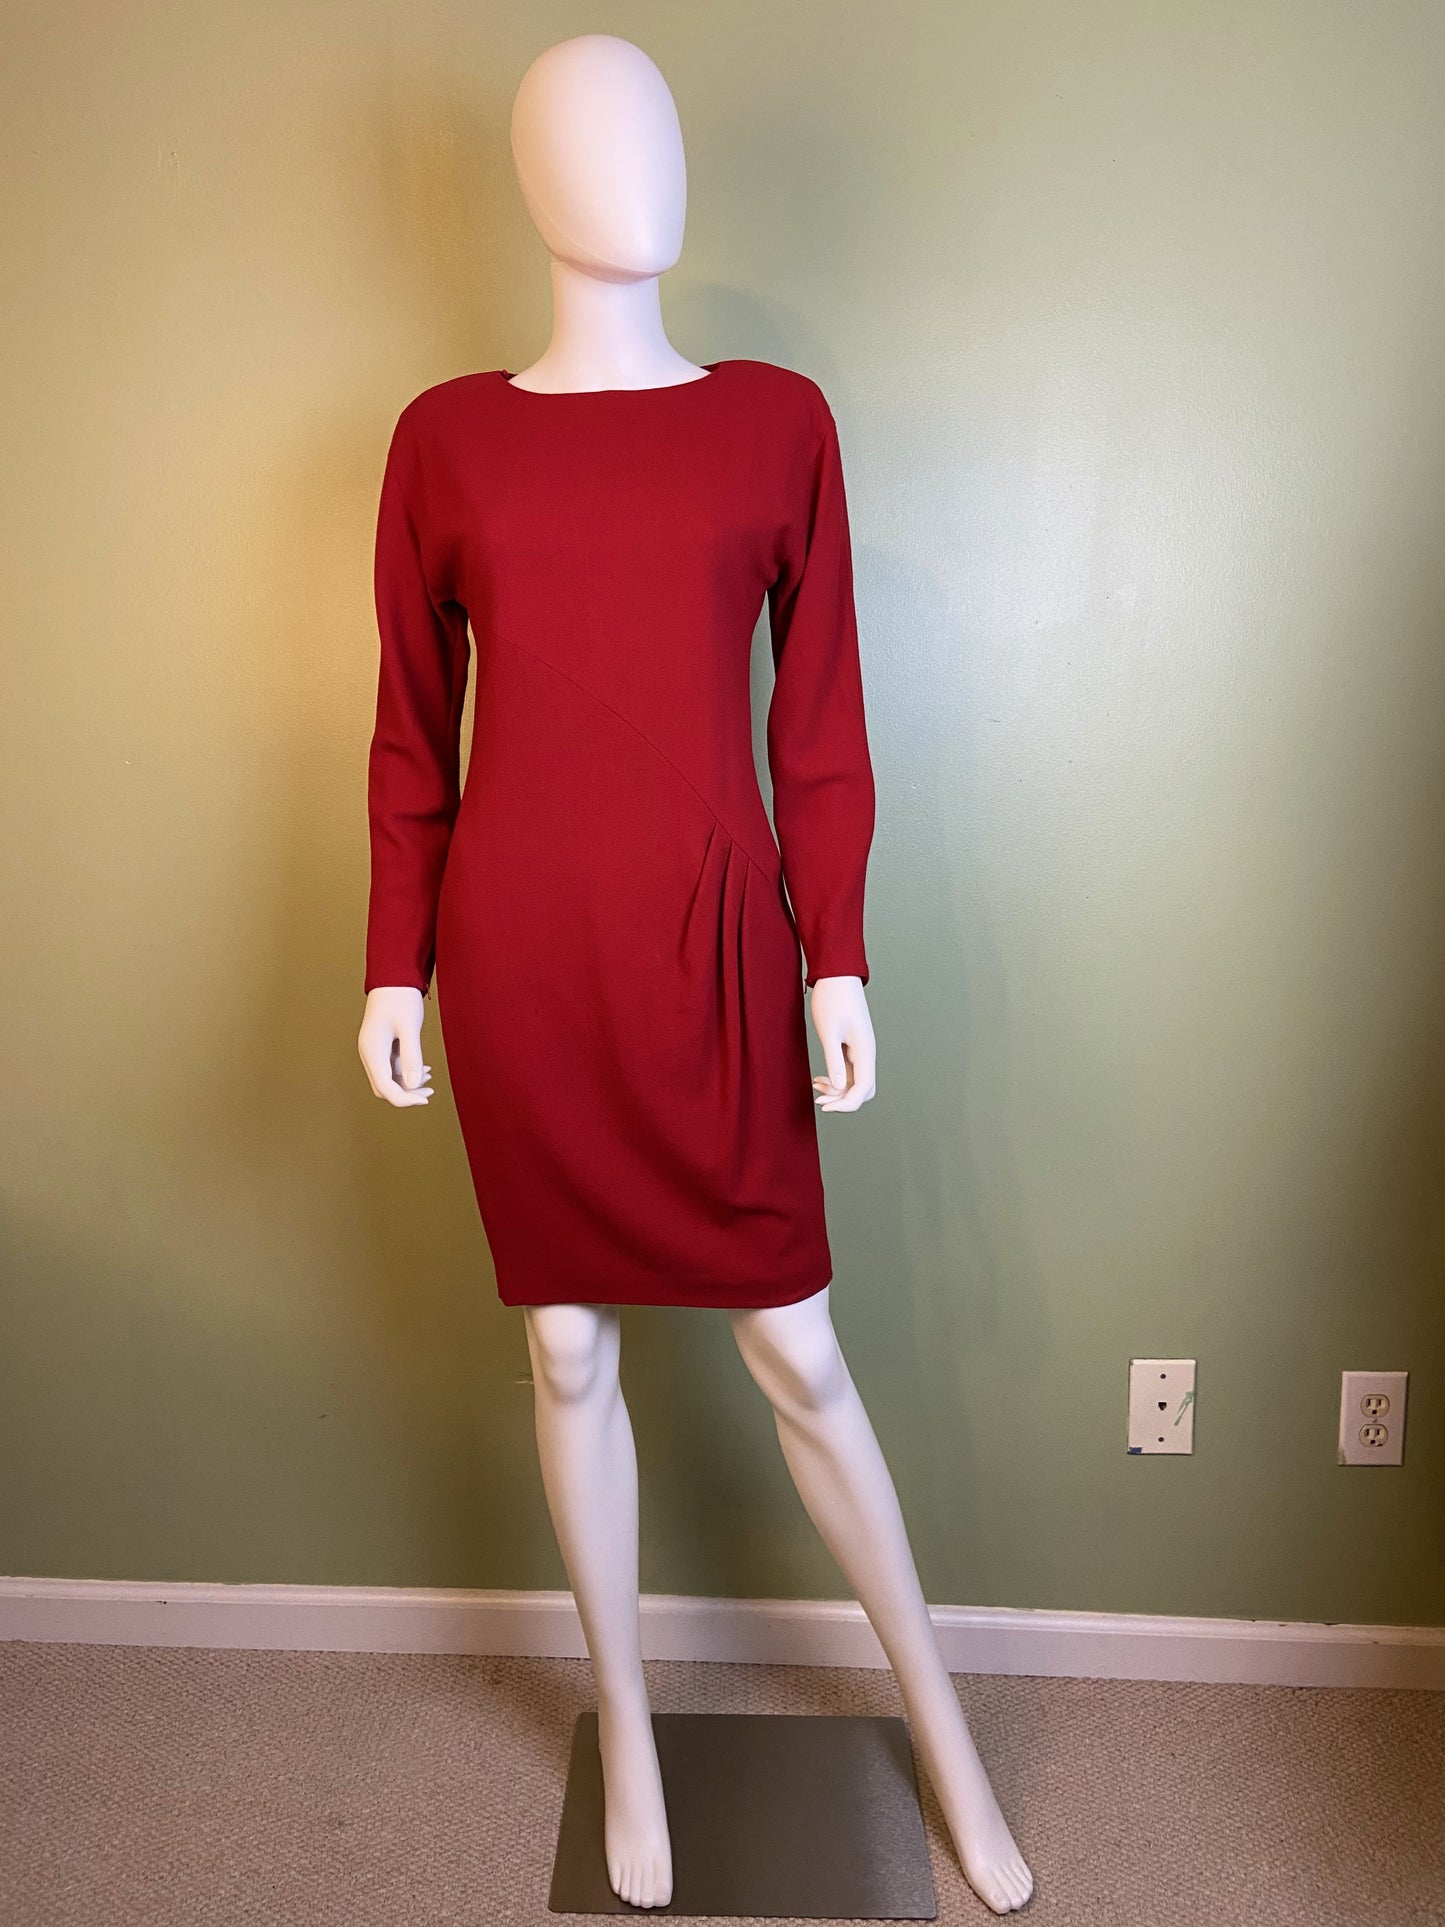 Linda Allard Ellen Tracy Red Wool Fitted Sheath Dress